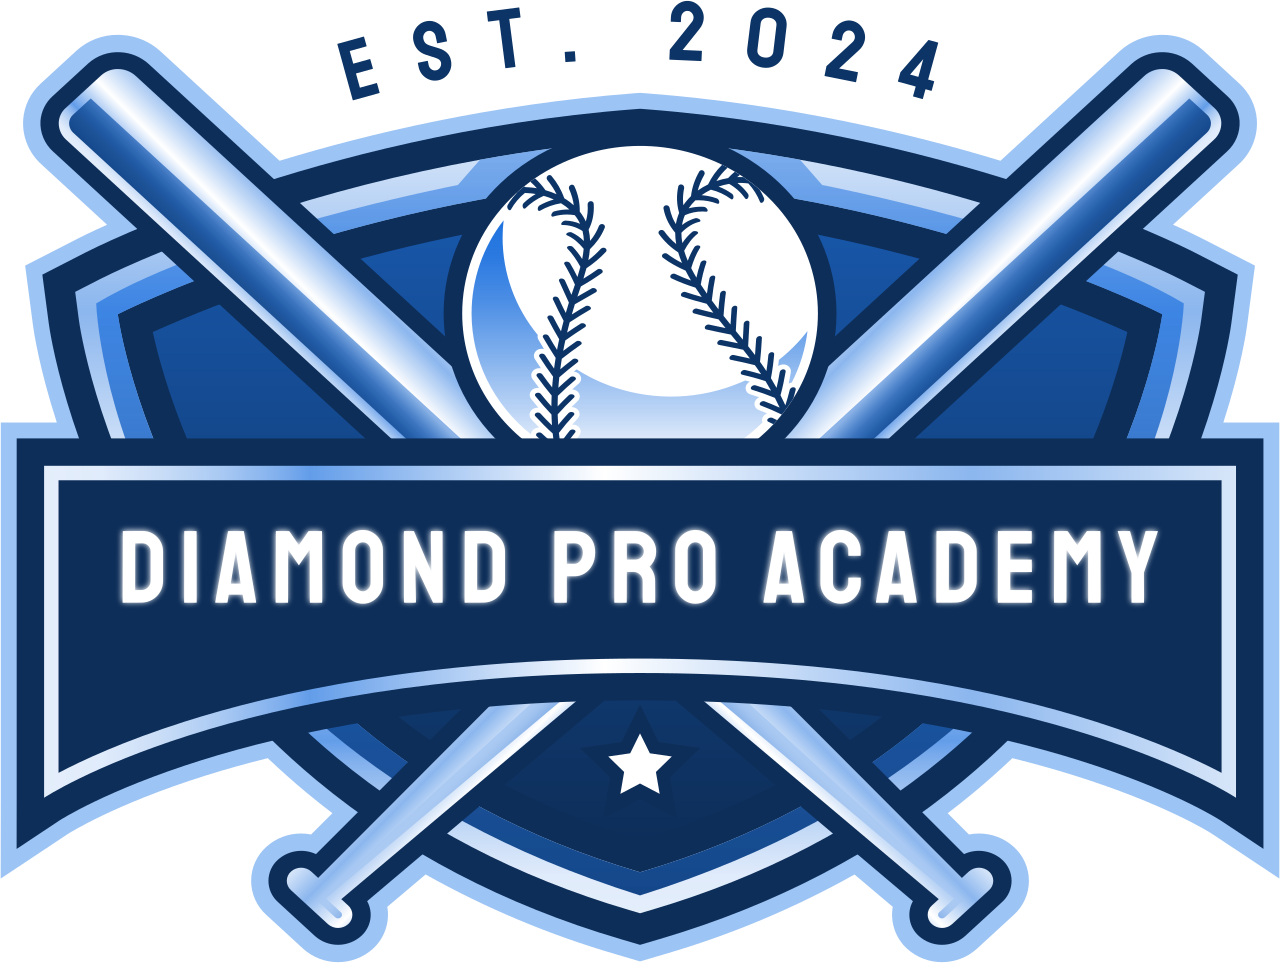 Diamond Pro Academy's logo